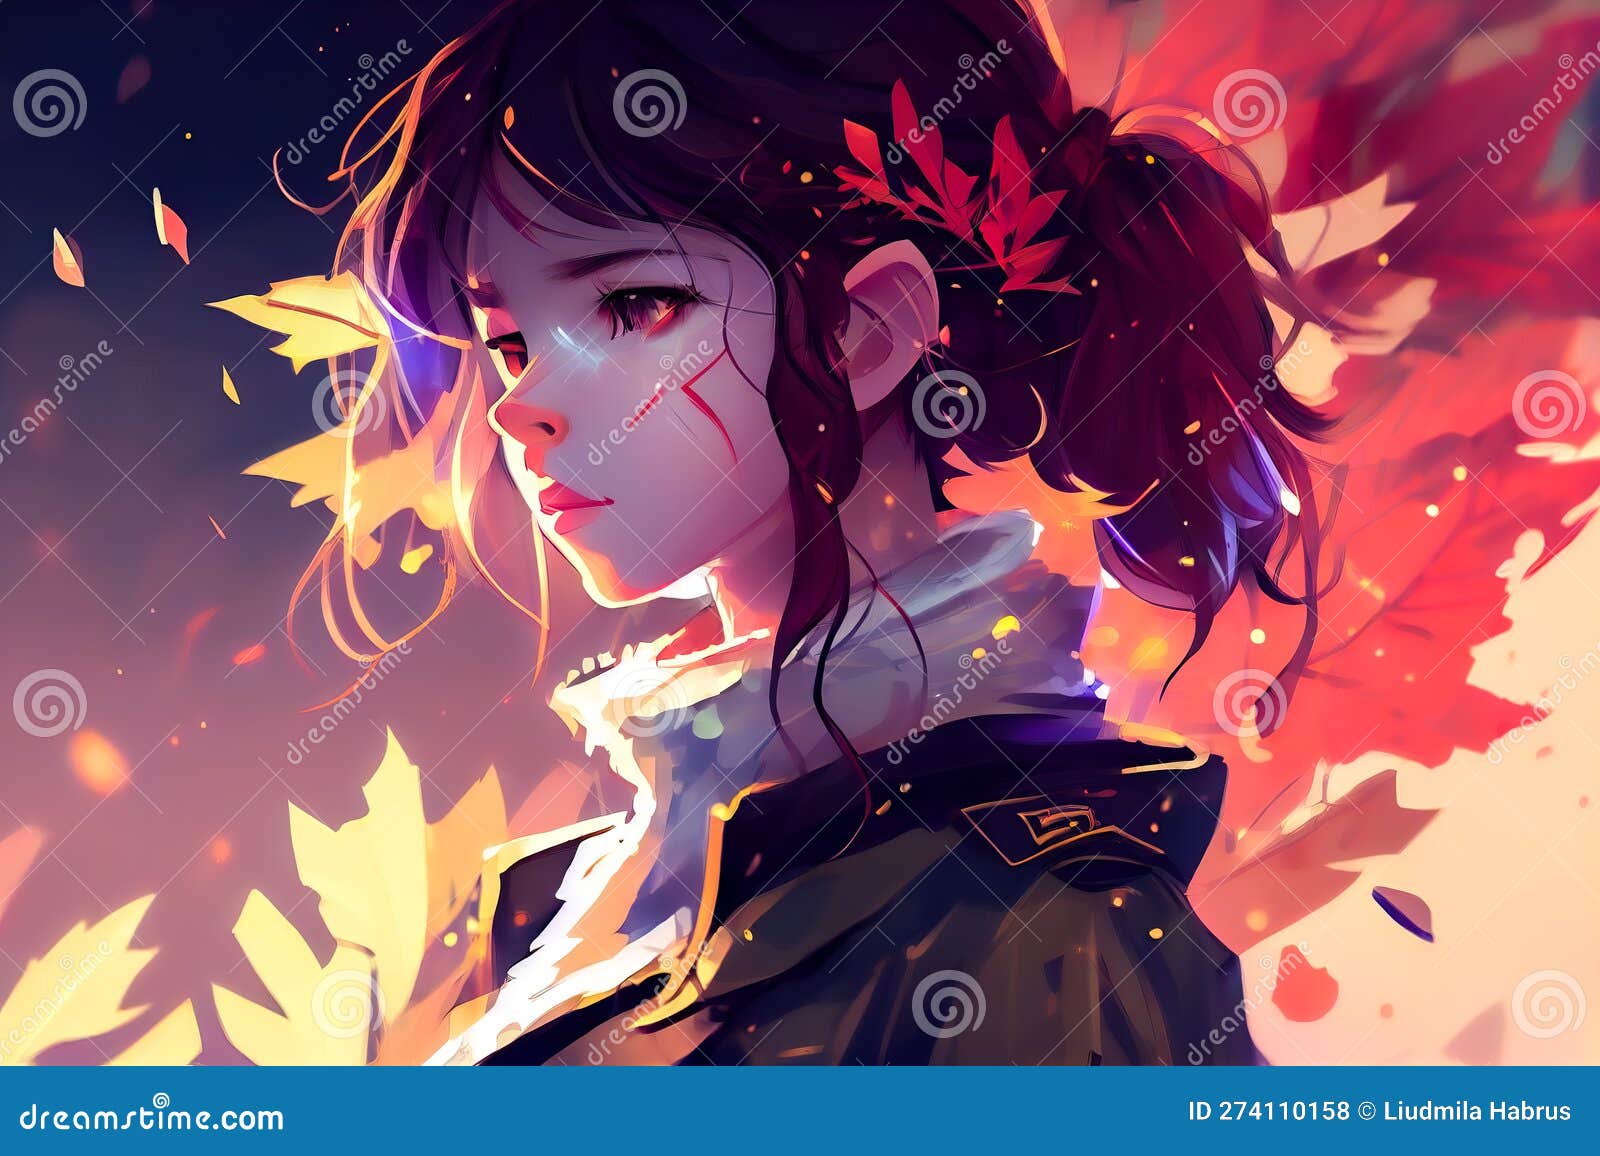 purple anime aesthetic on Pinterest